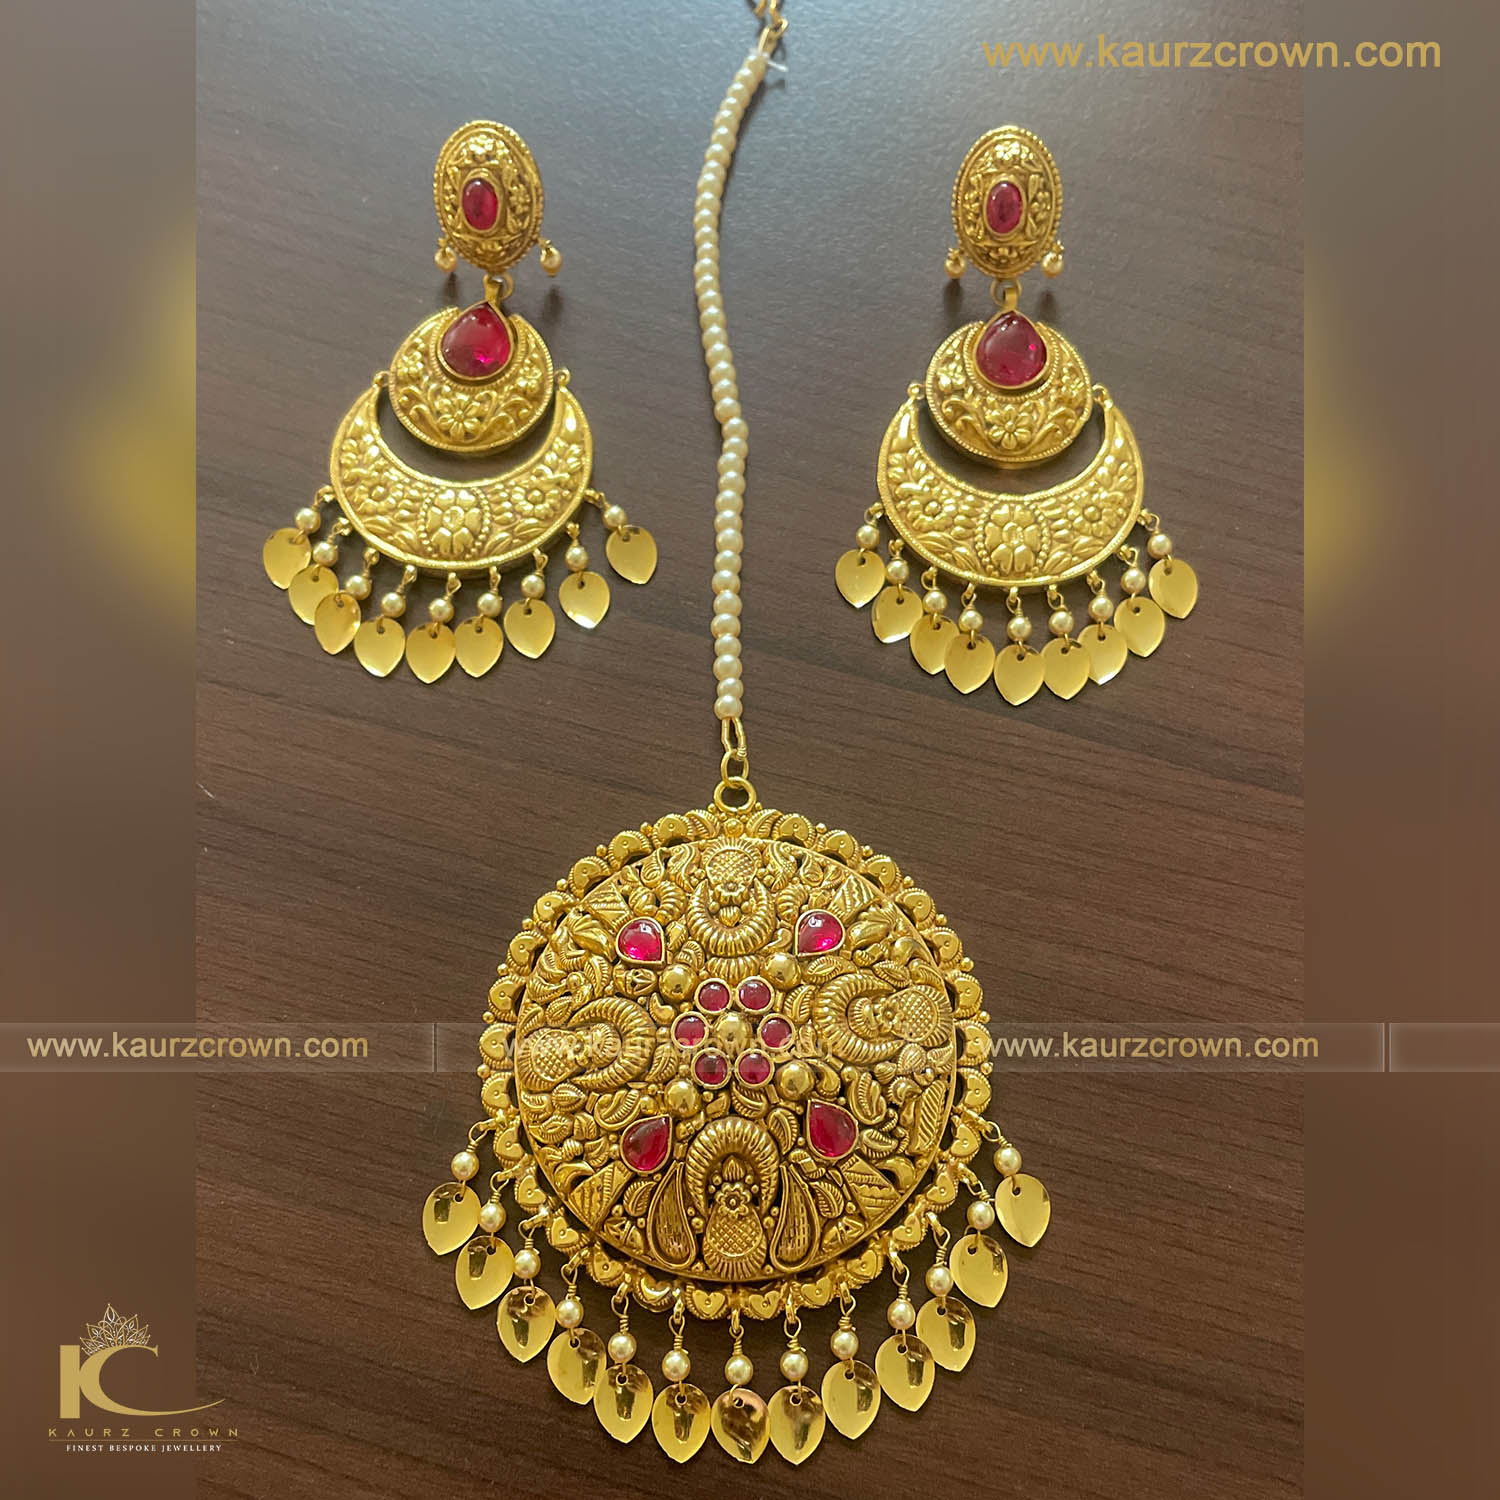 Punjabi traditional jewellery Punjab